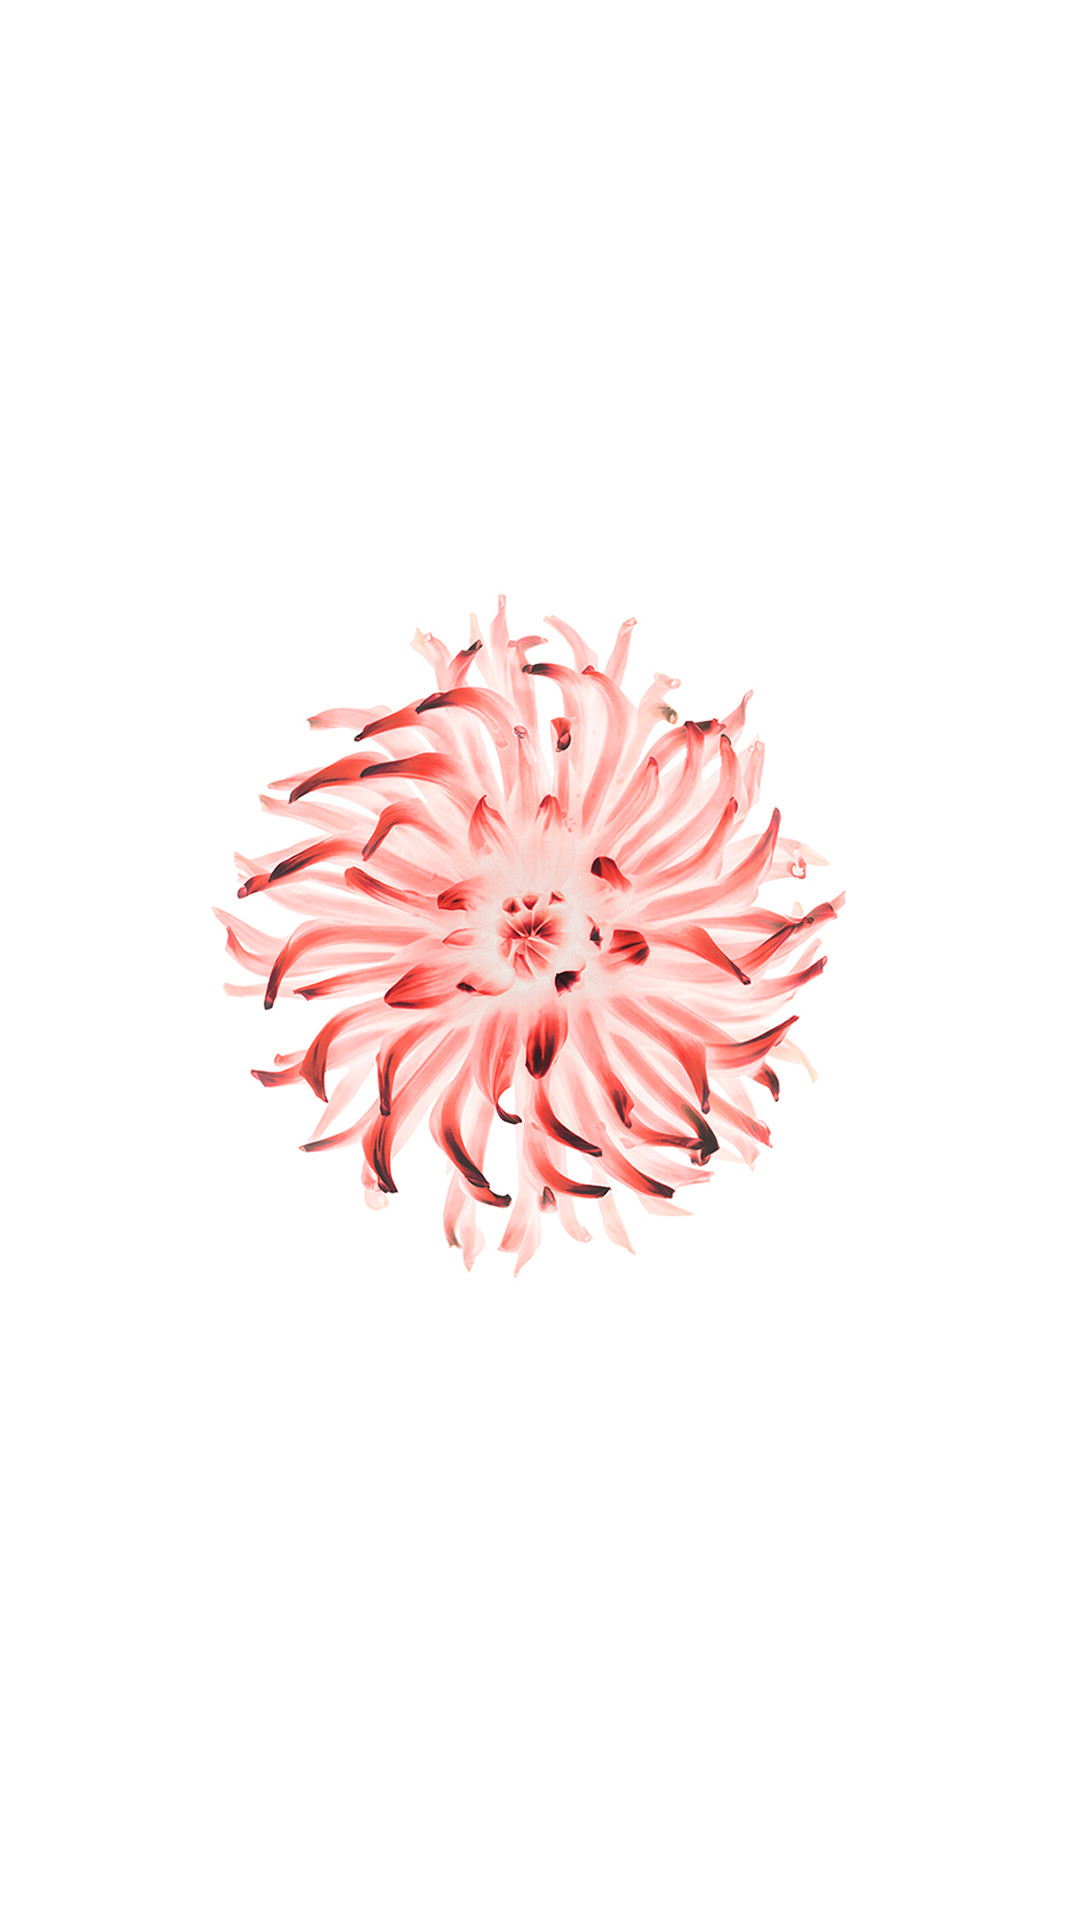 1080x1920 Apple iPhone 6 Plus Wallpaper - red Lotus Flower